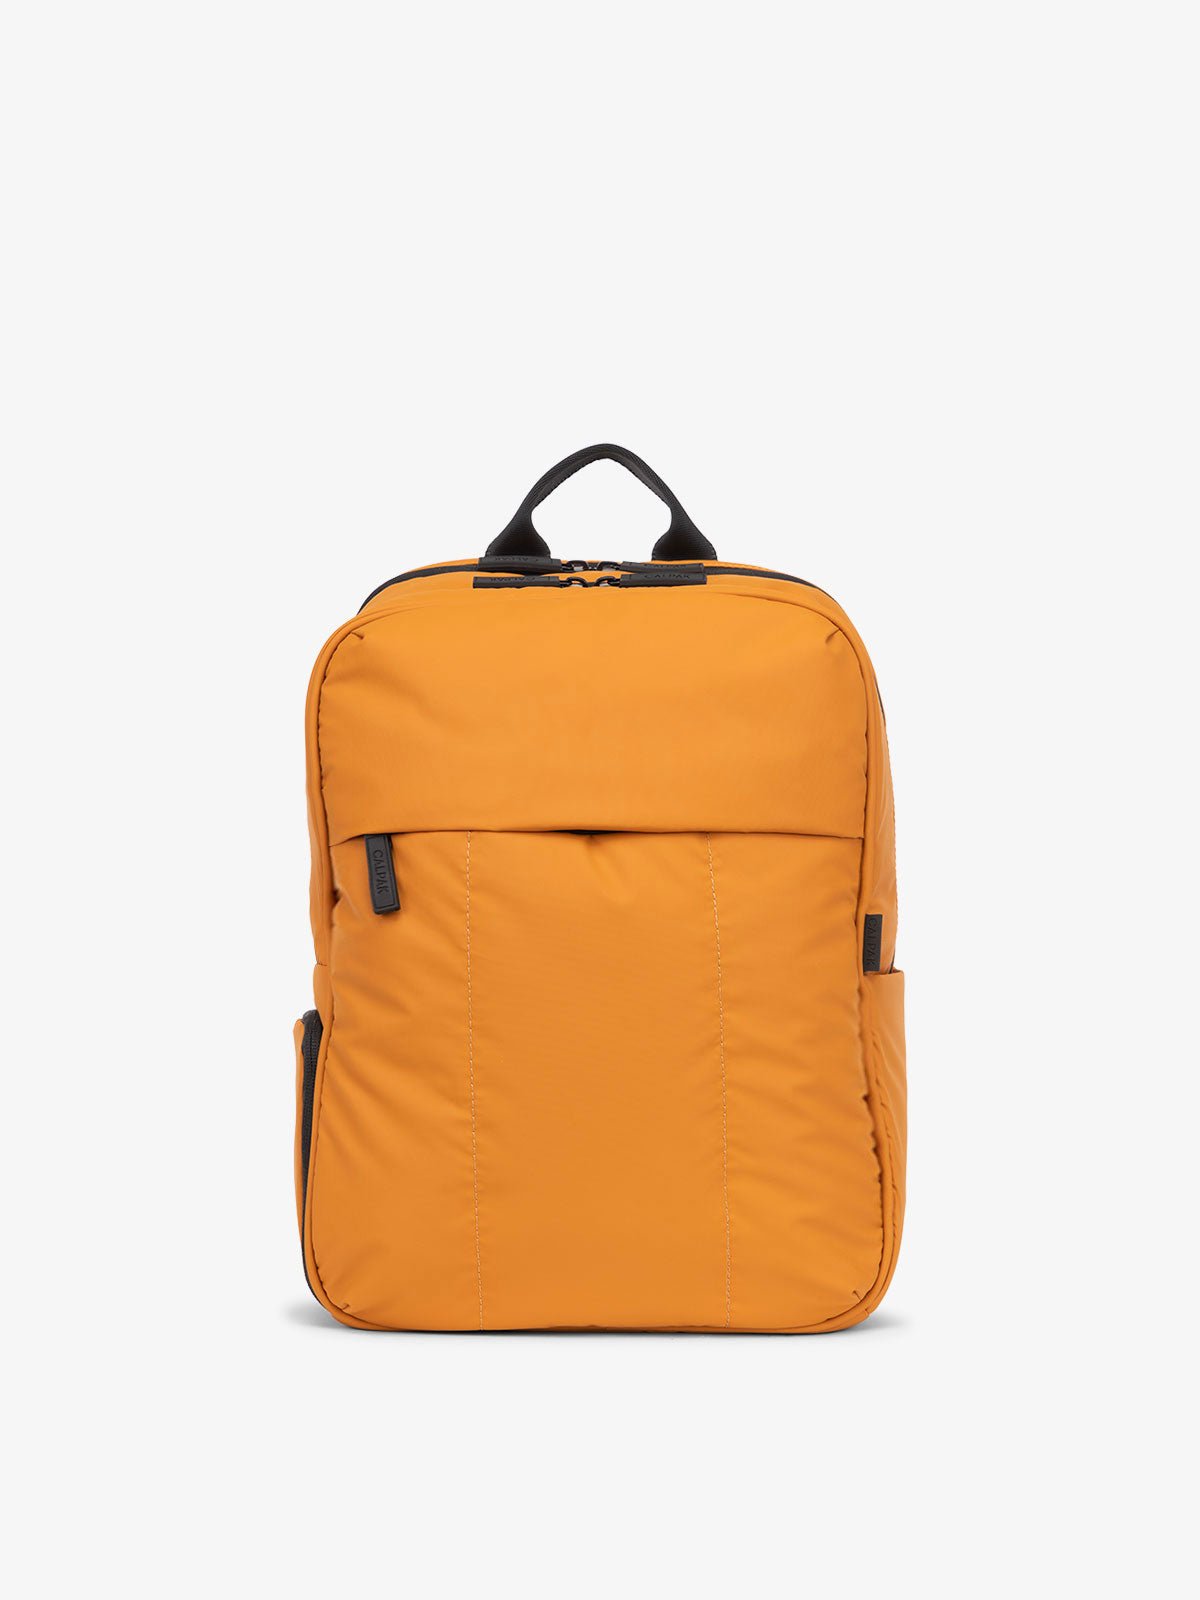 CALPAK Luka Laptop Backpack in pumpkin